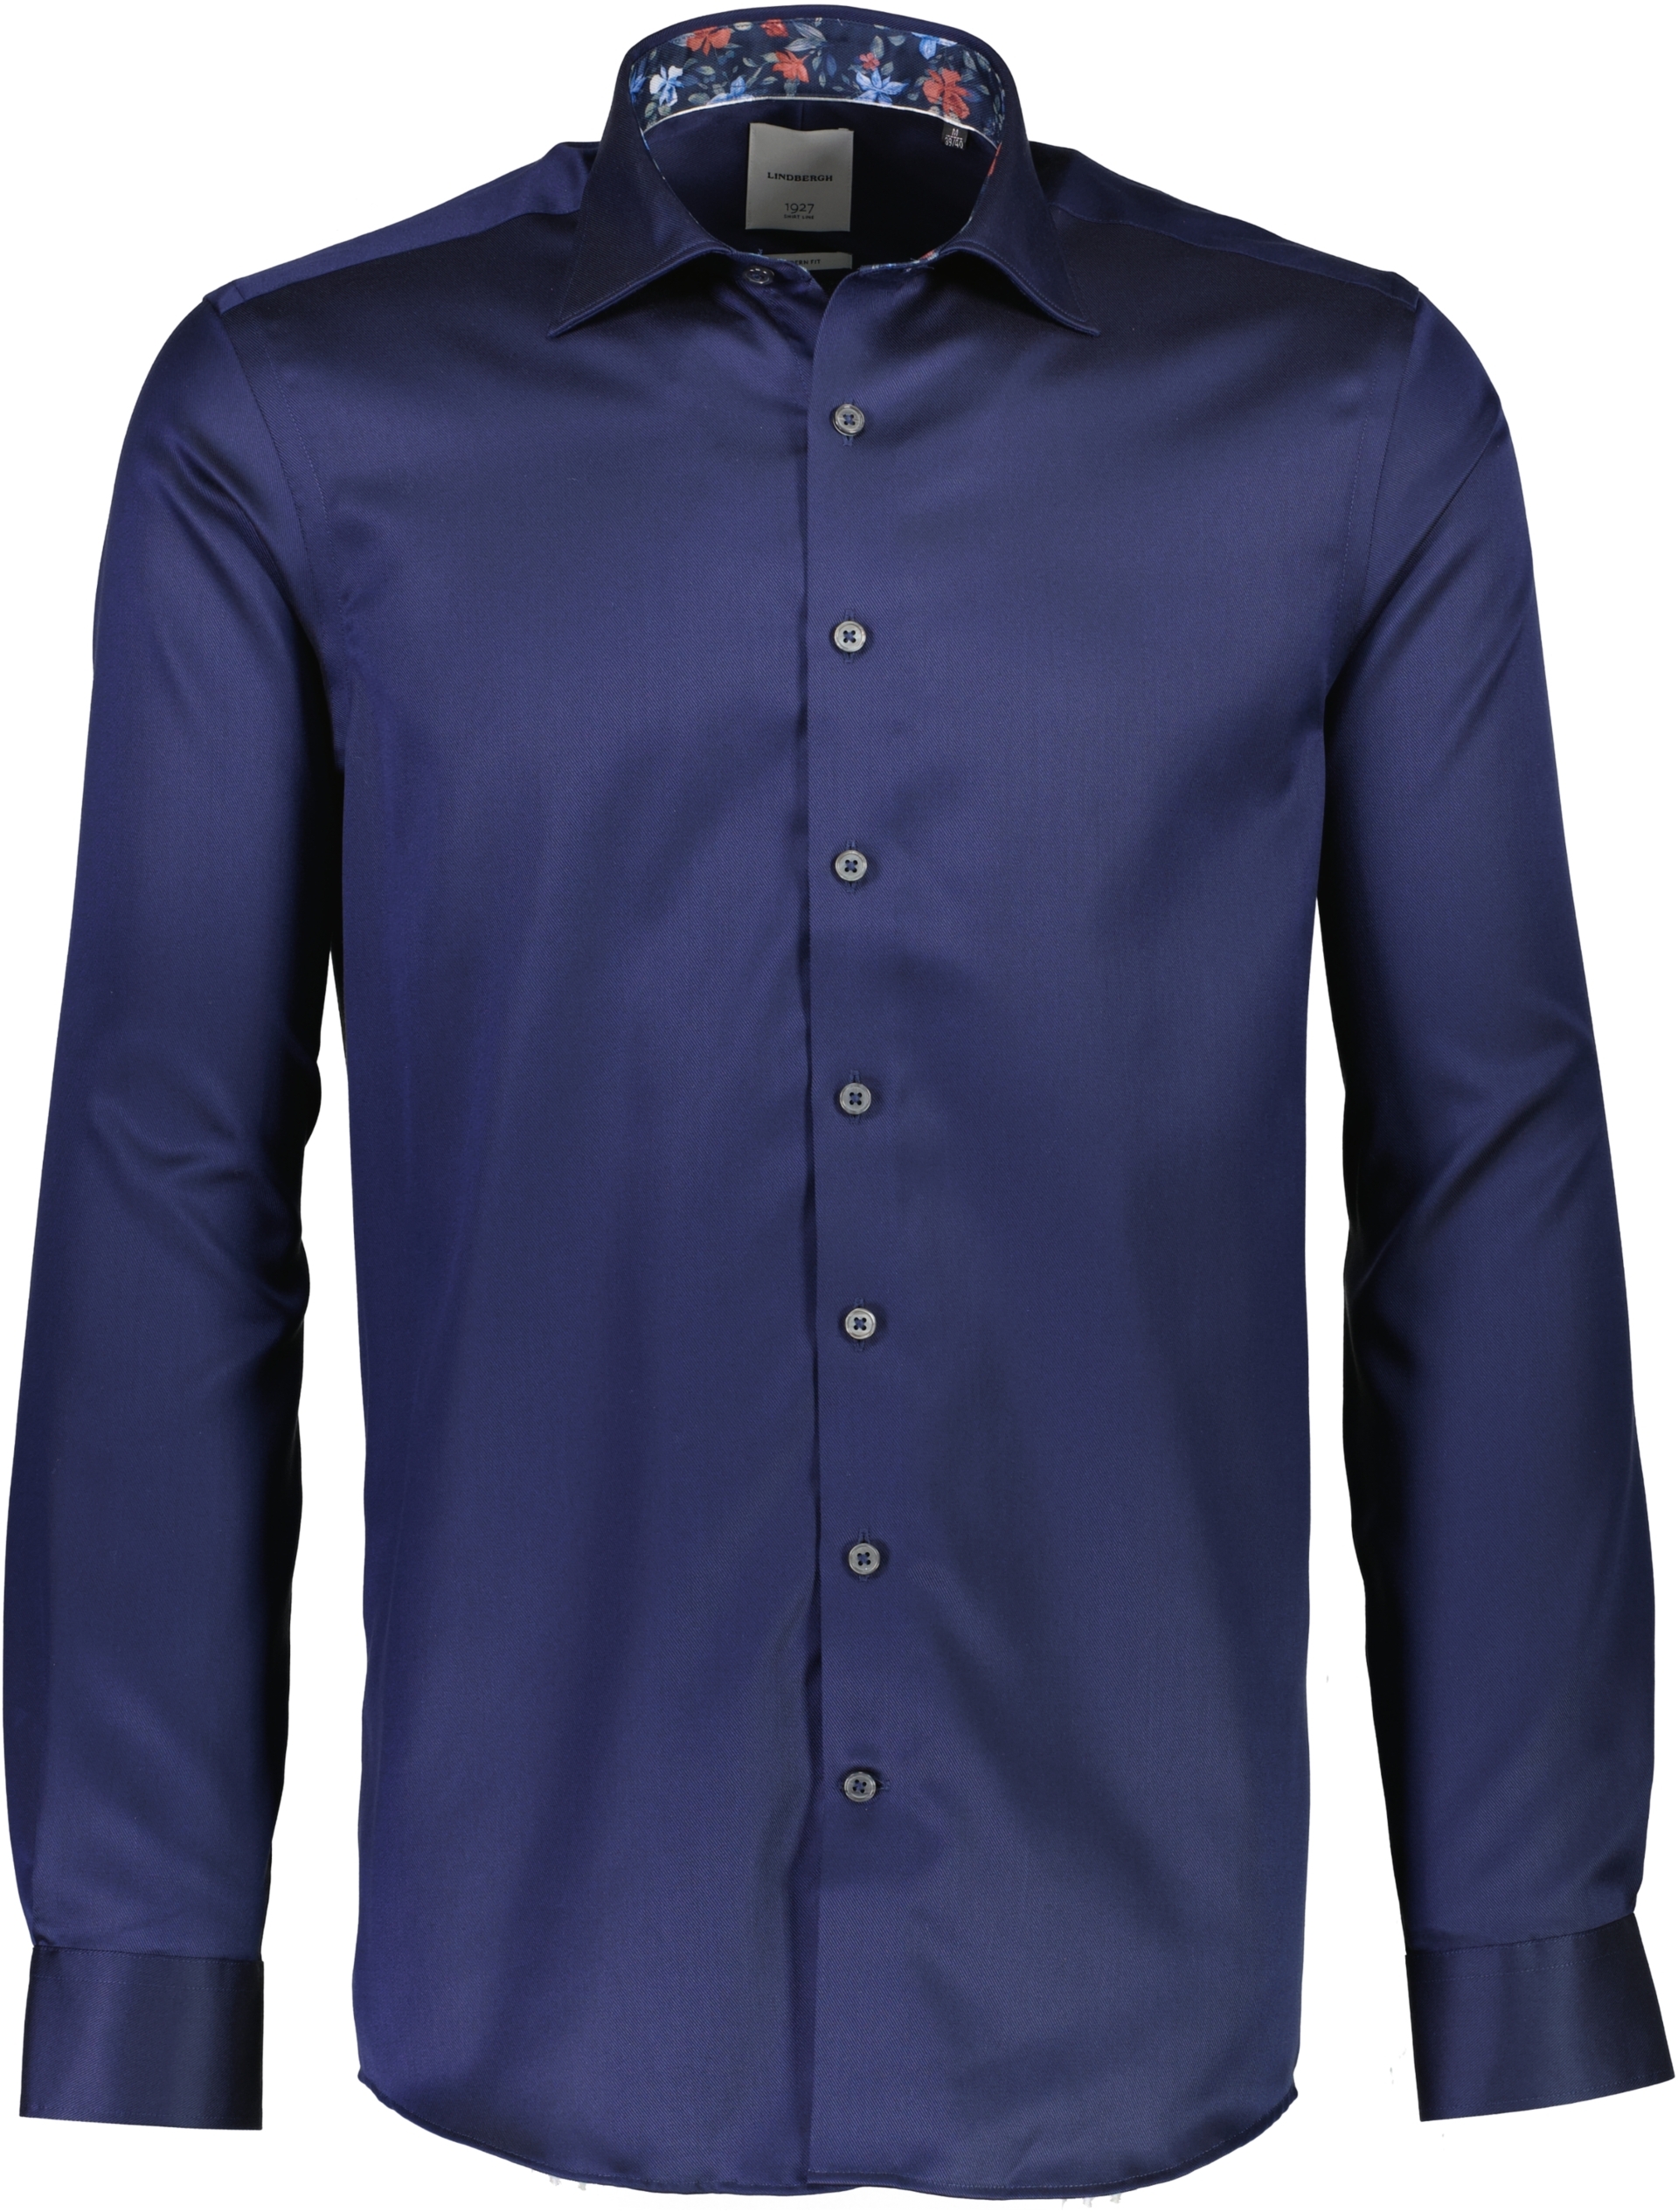 Lindbergh Business casual shirt blue / dark blue